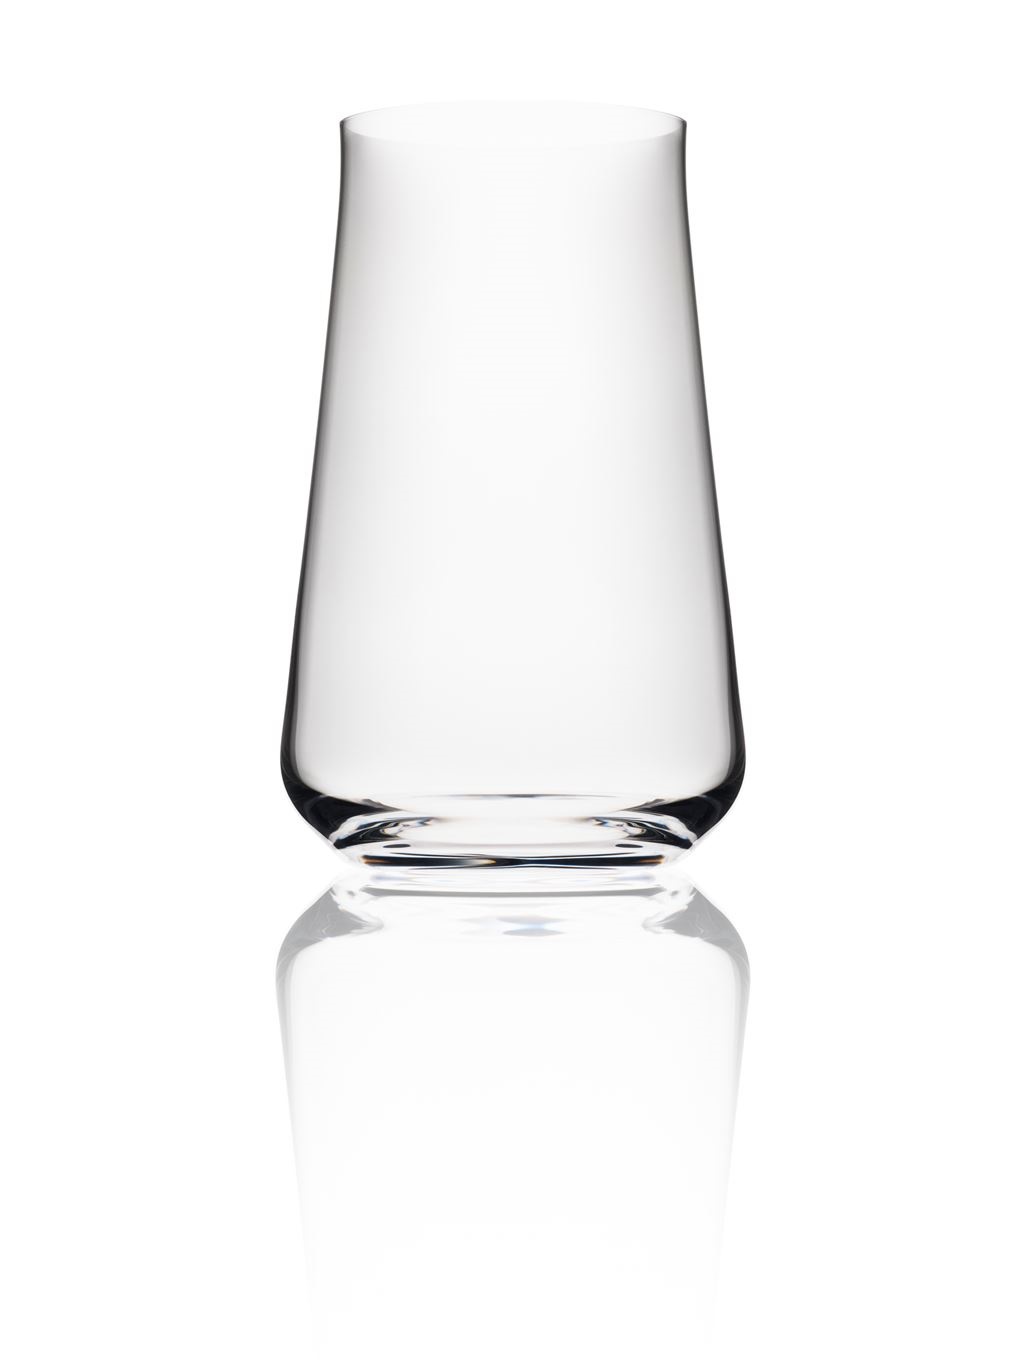 Polaris grt kozarec 2/1 530 ml voda